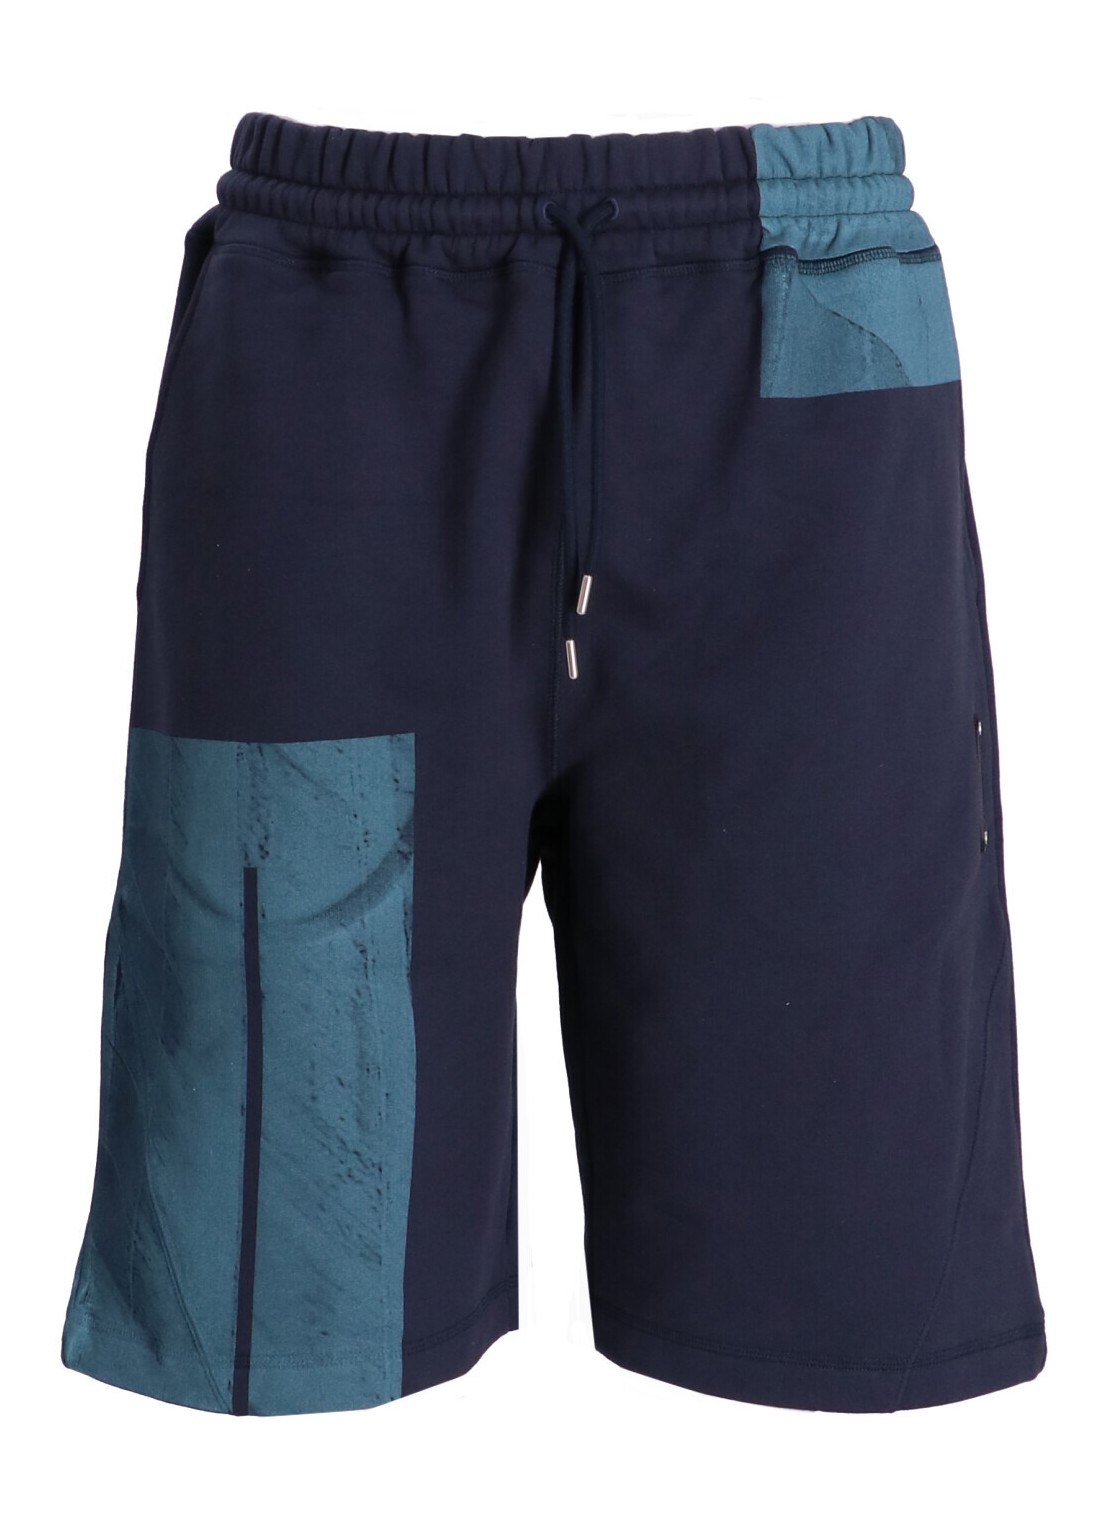 Pantalon corto a-cold-wall* short pant man strand sweatshort acwmb282 navy navy talla M
 